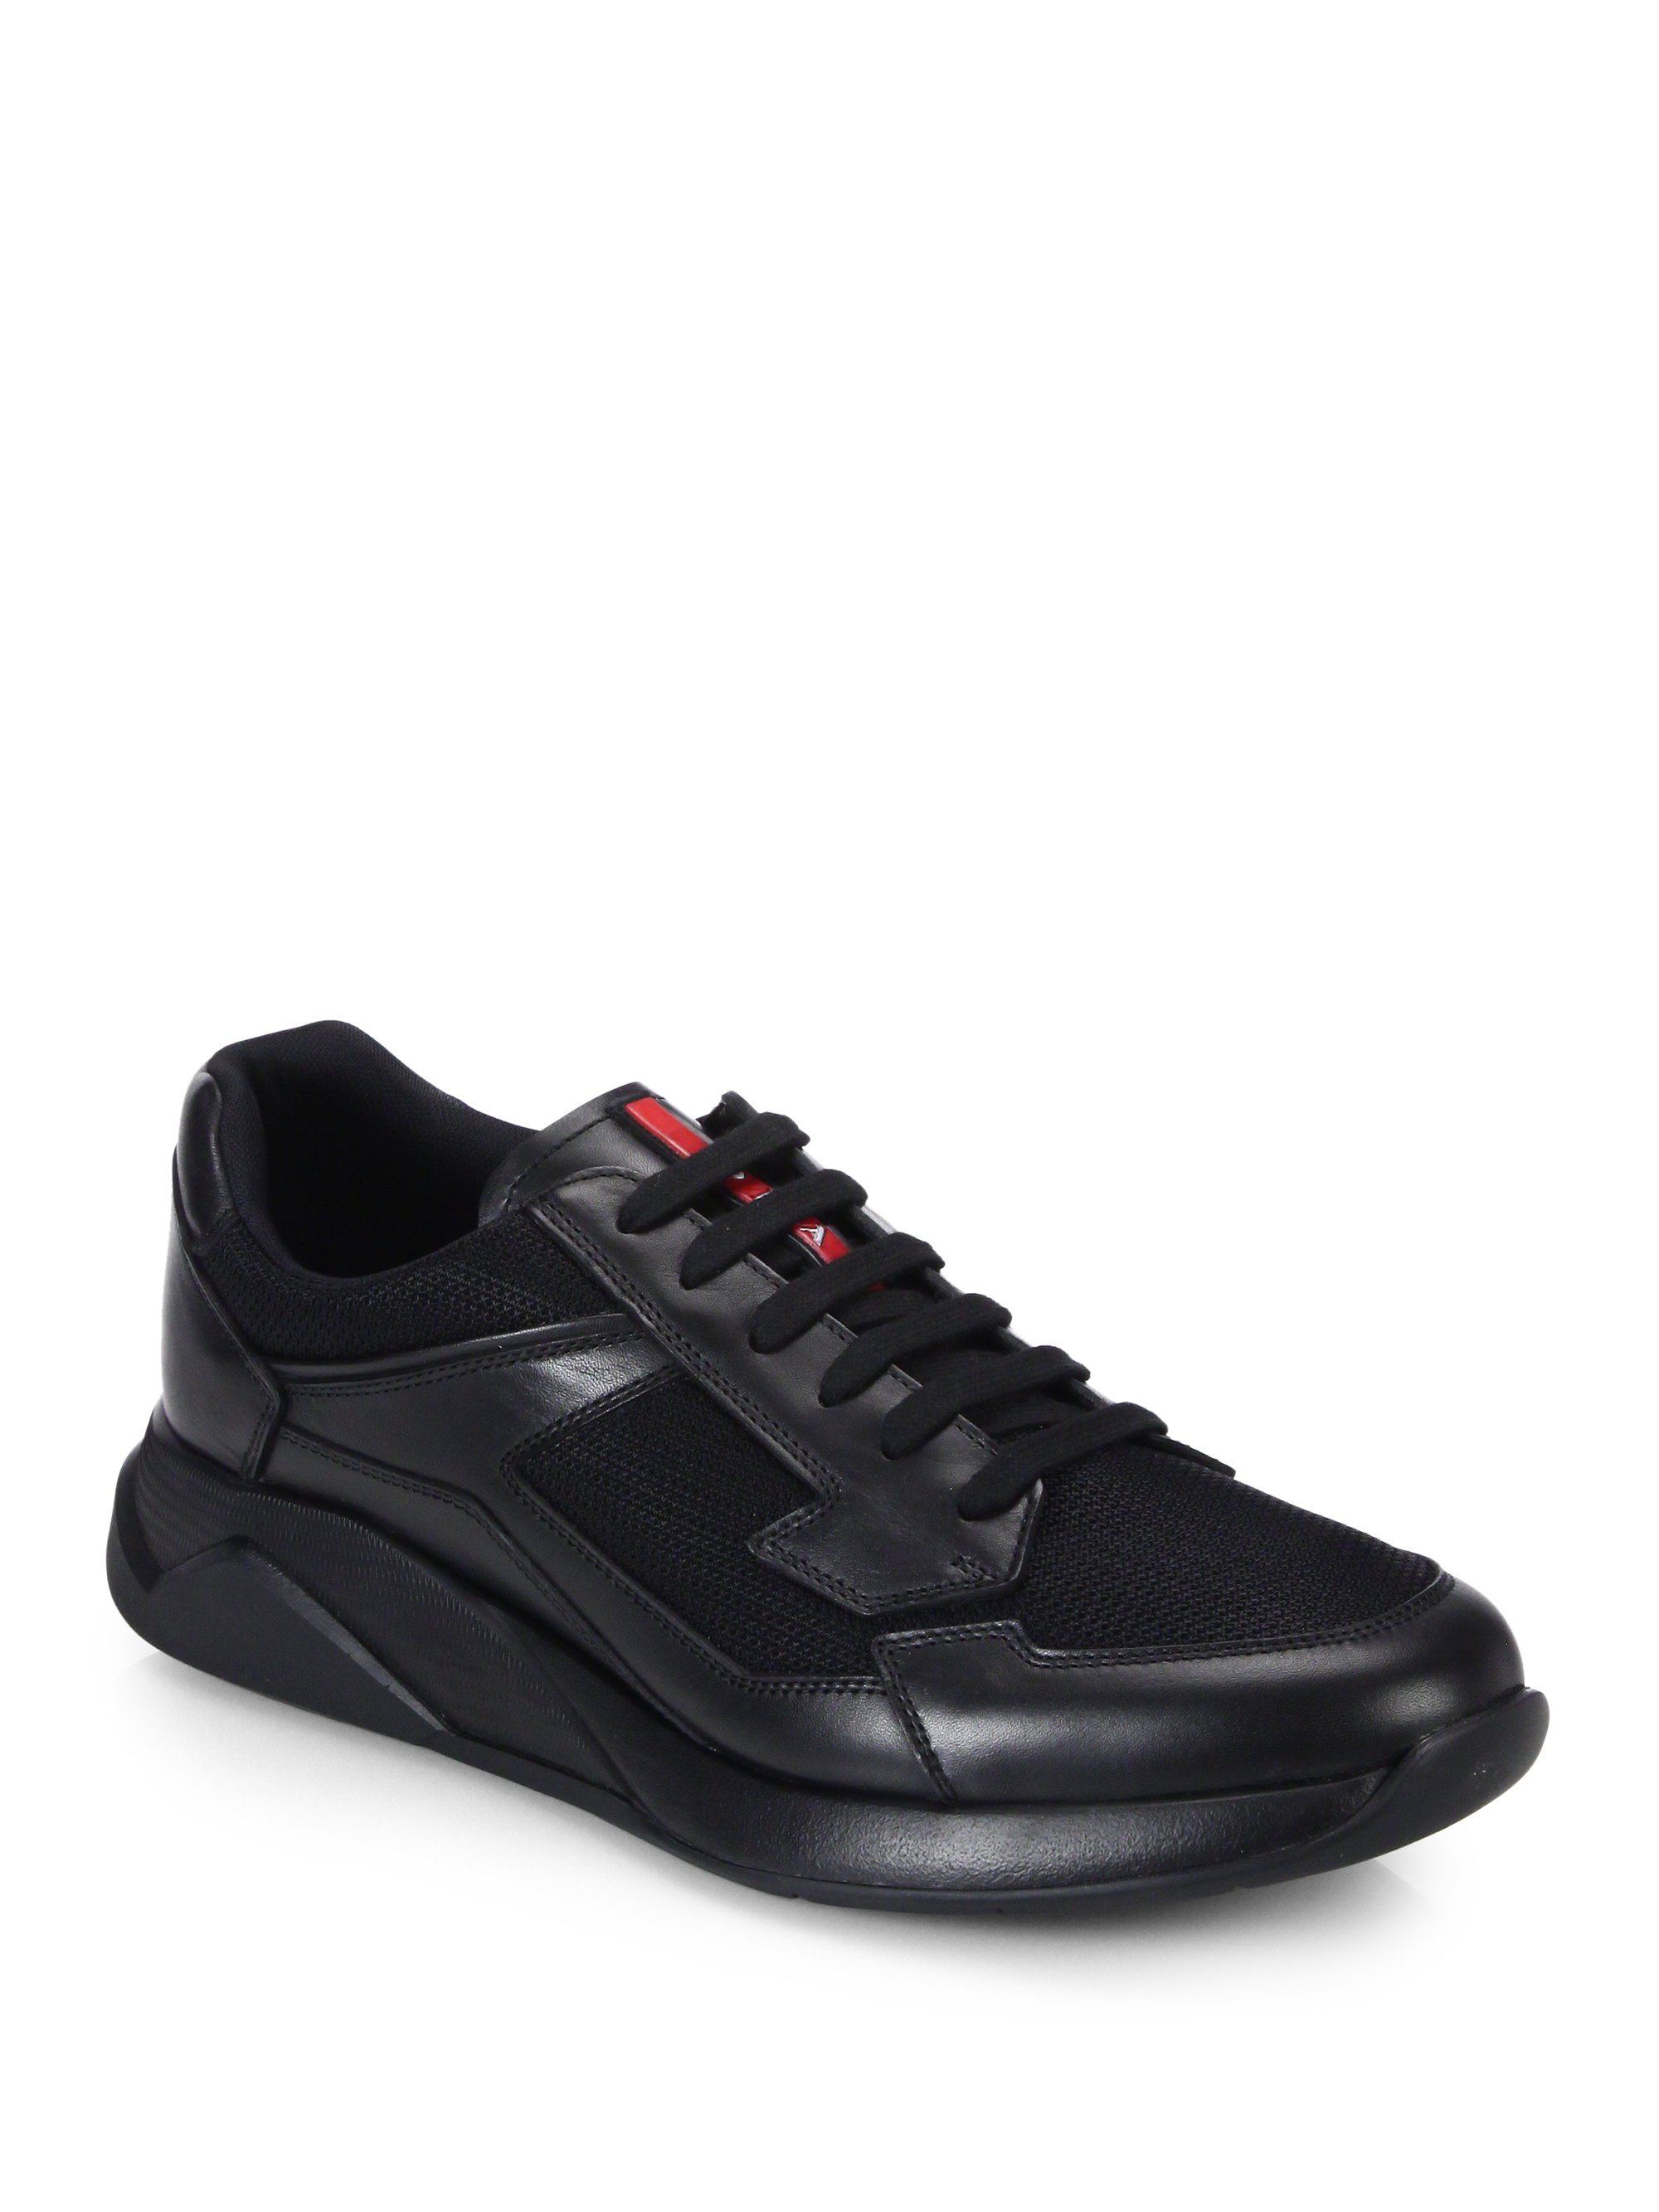 Lyst - Prada Leather Running Sneakers in Black for Men